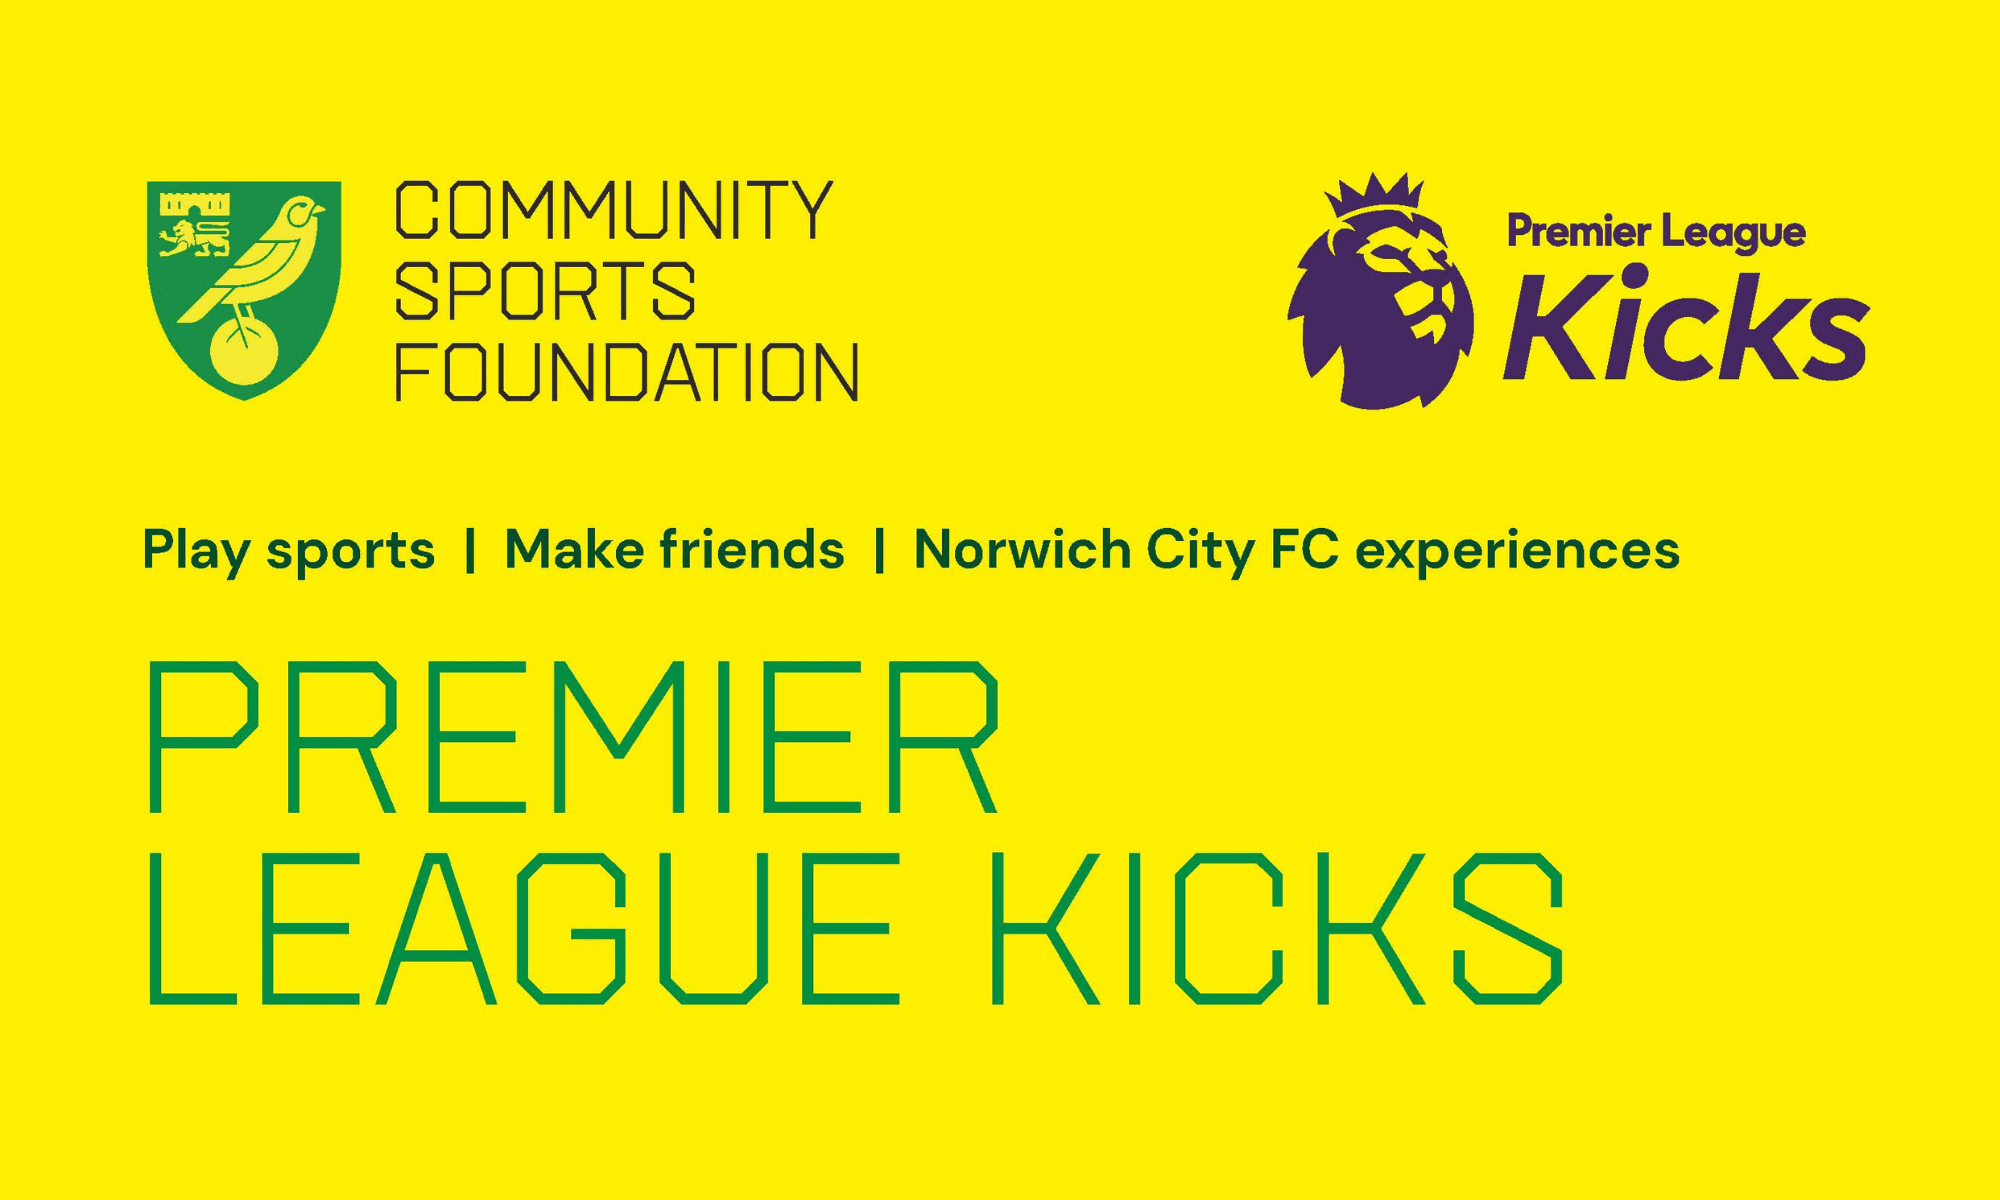 Yellow background with Community Sports Foundation logo, Premier League Kicks logo. Text reads play sports, make friends, Norwich City FC experiences and Premier League Kicks.